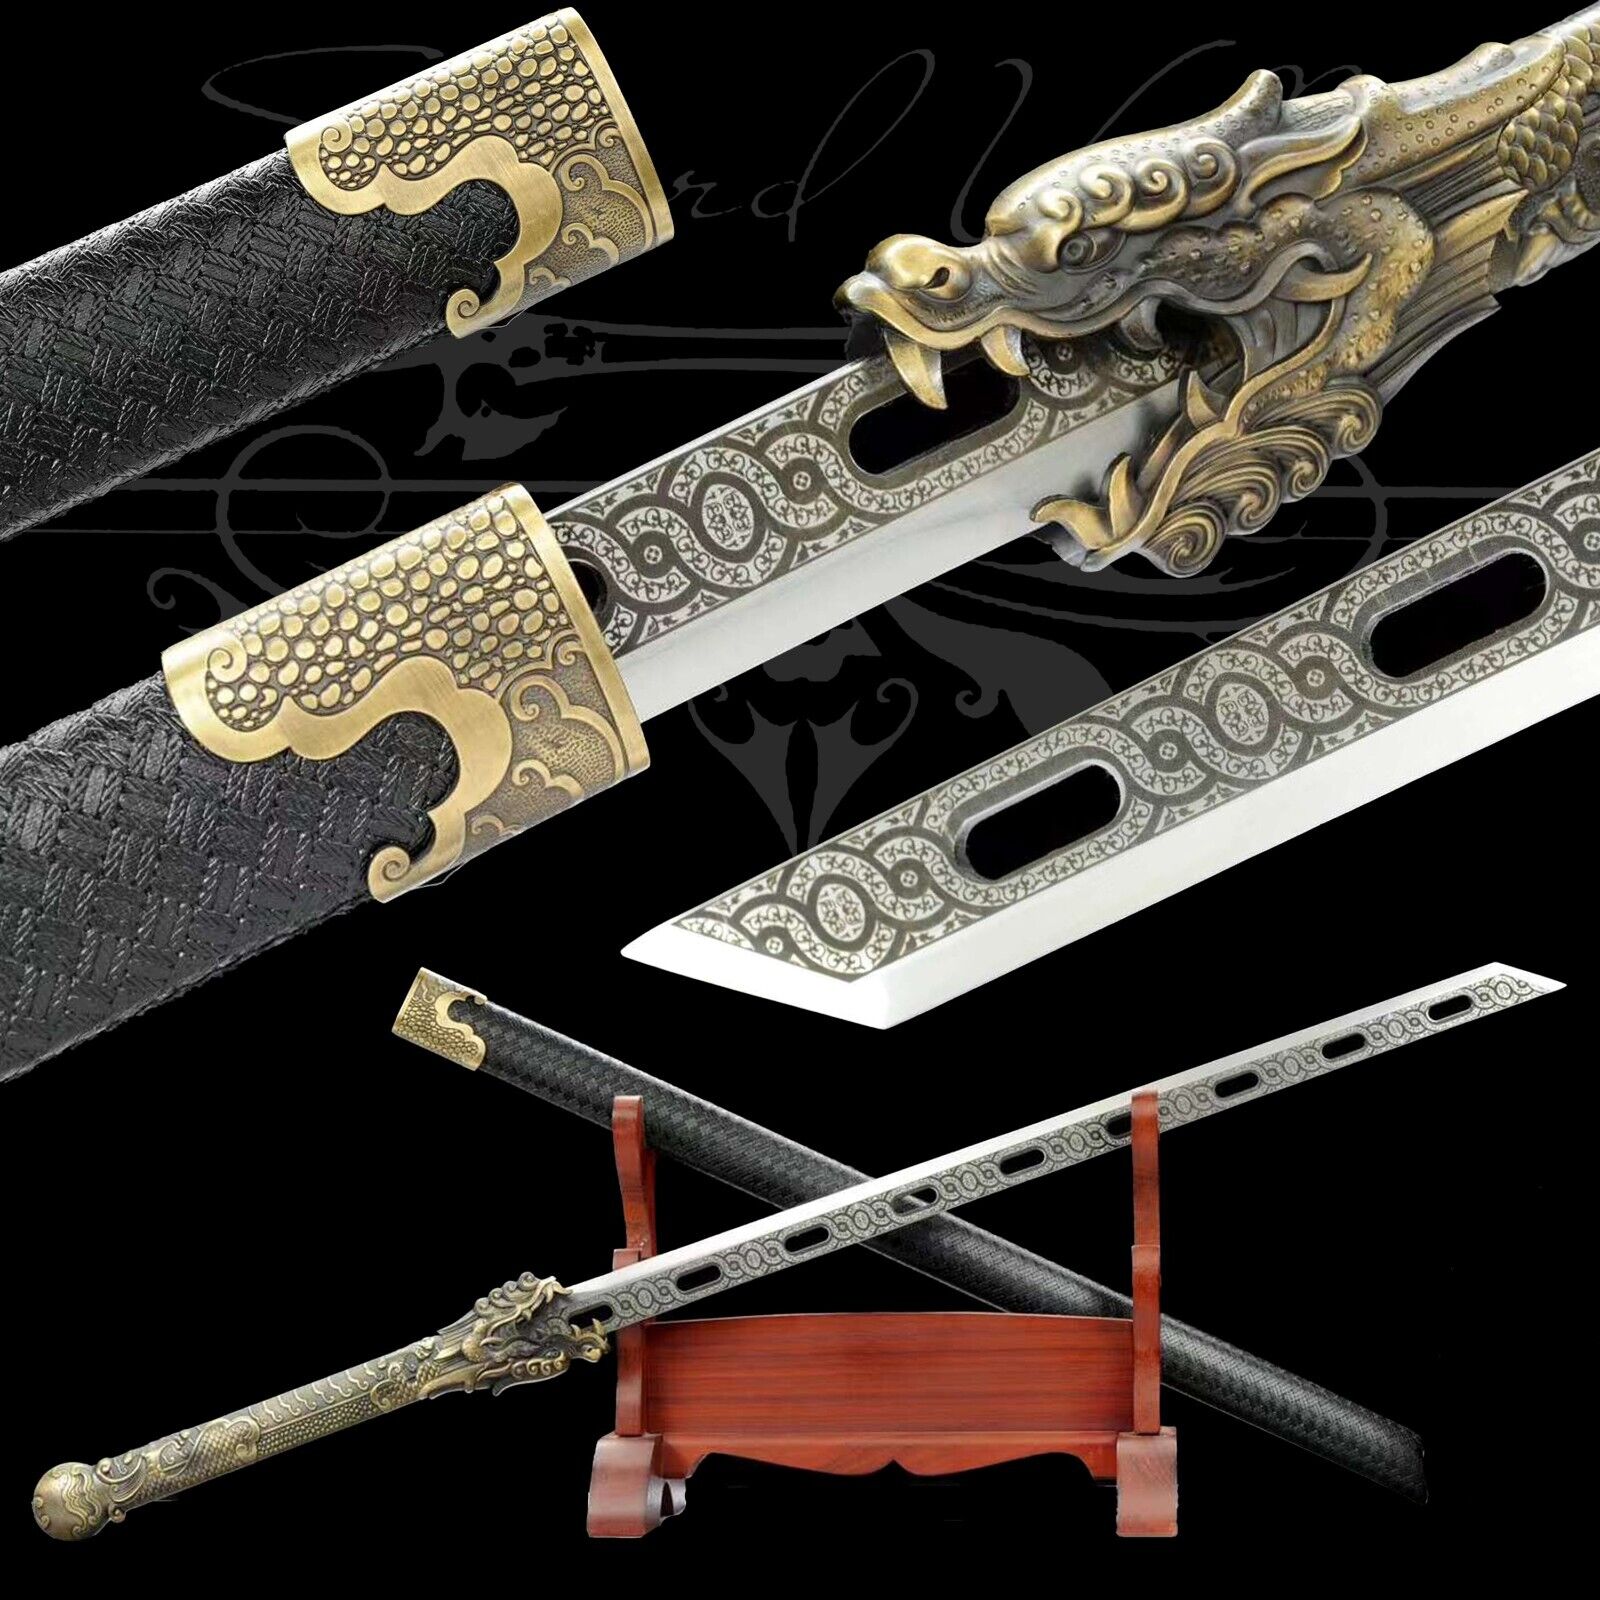 Handmade Katana/Manganese Steel/Collectible Sword/Full Tang/Sharp/Battle Ready